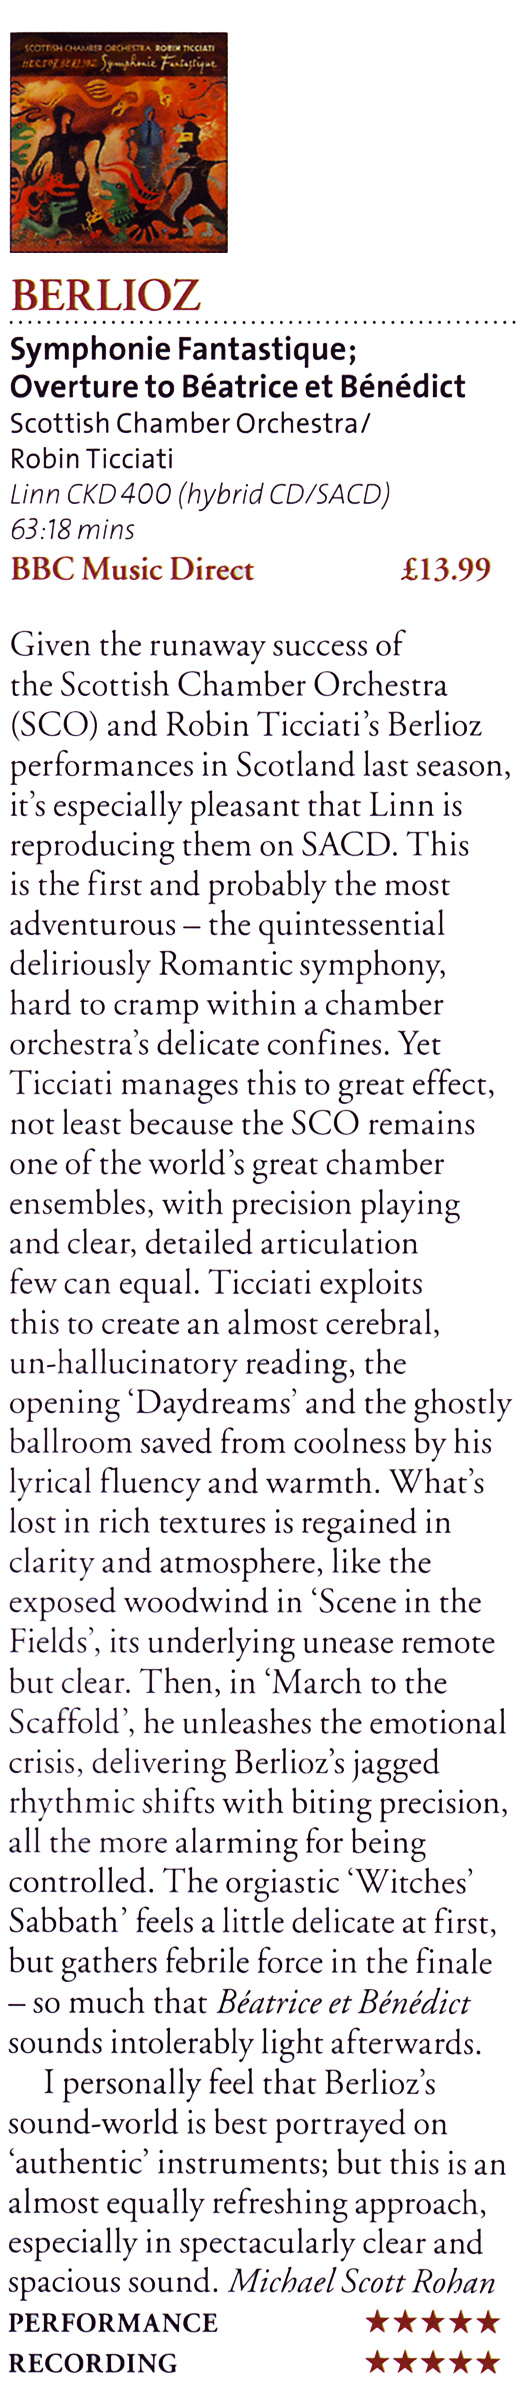 CKD 400 BBC Music Magazine Review